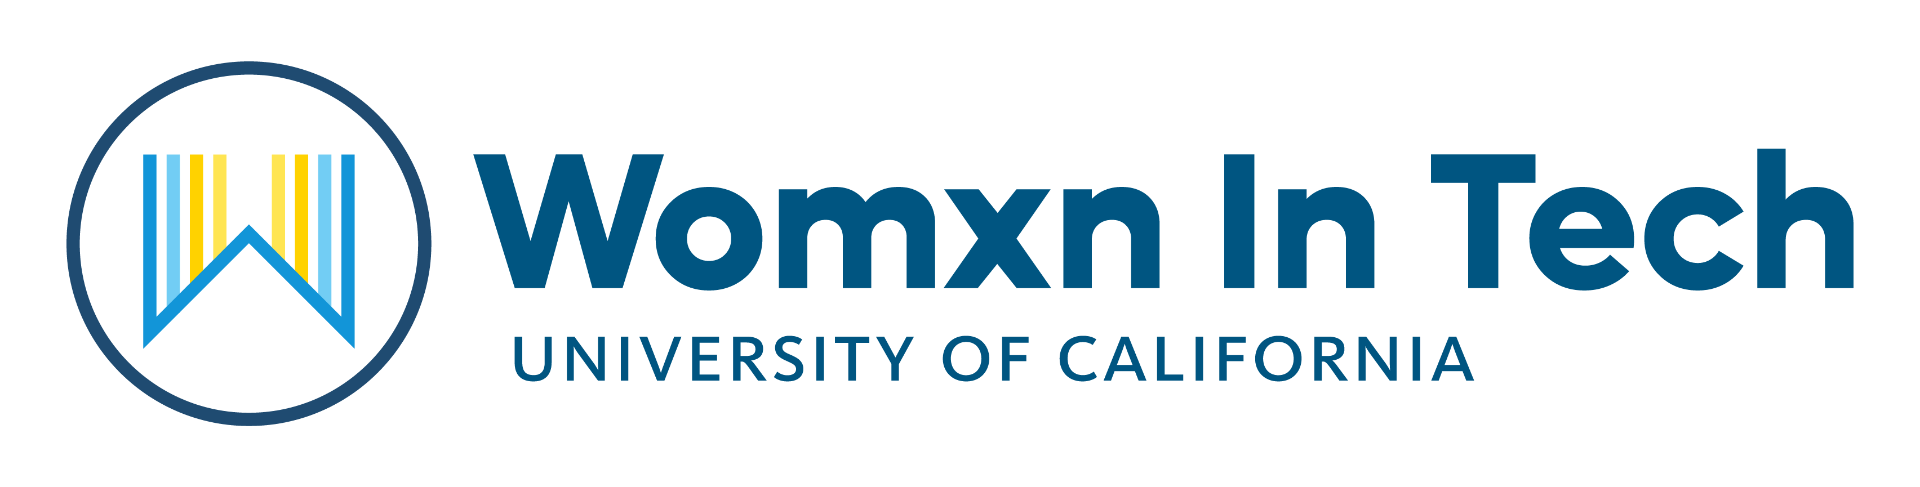 University of California Women in Tech logo